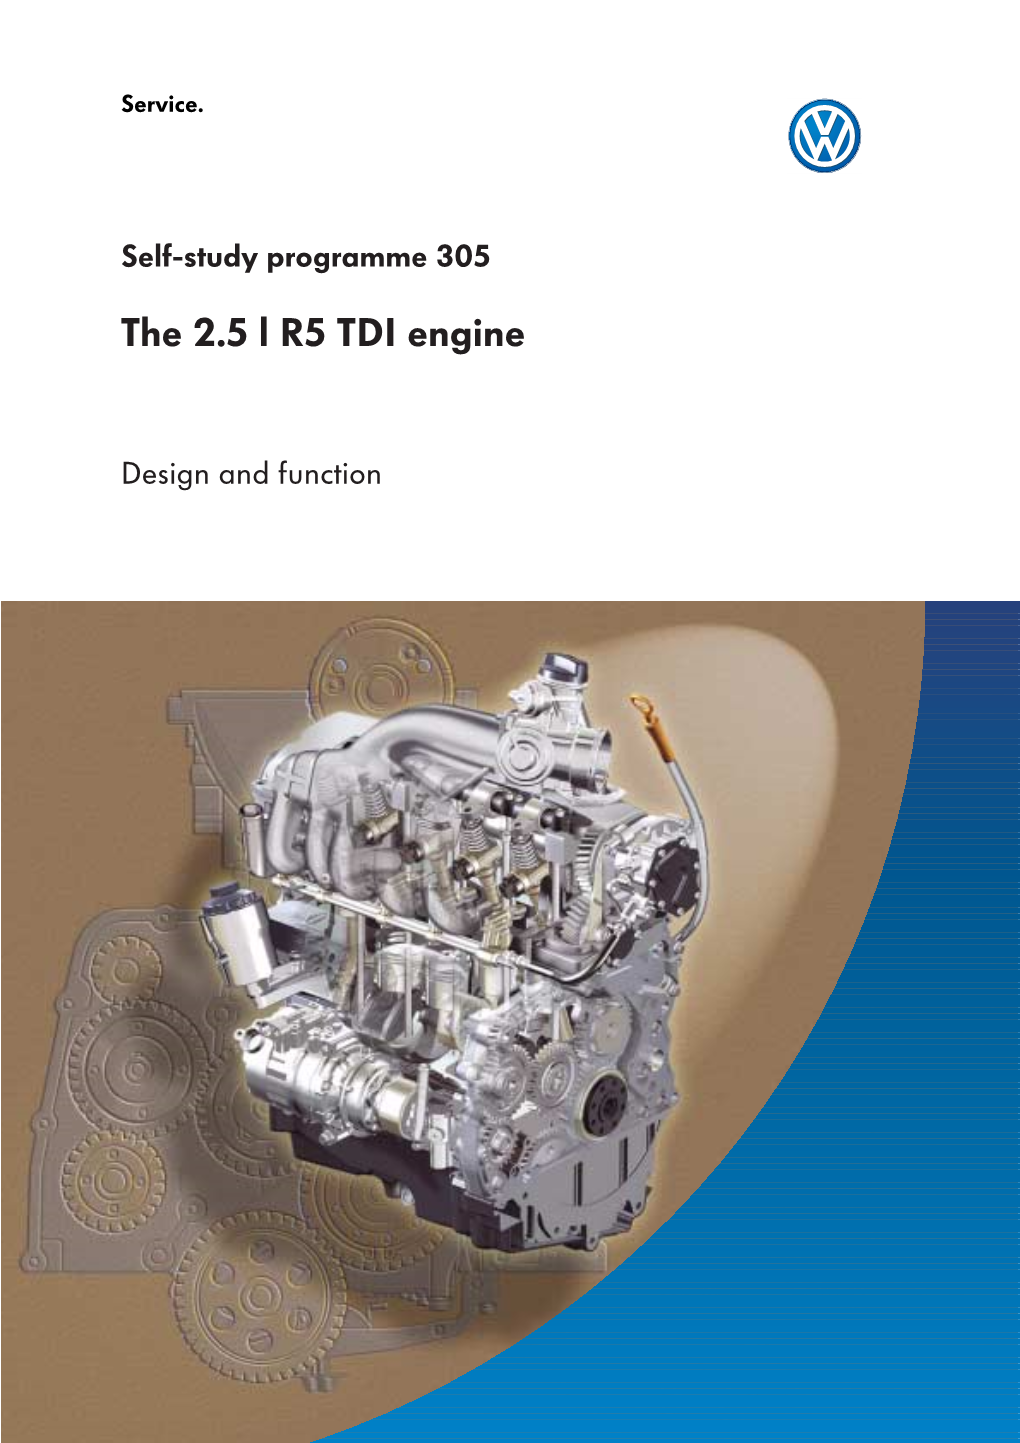 Ssp305 the 2.5 L R5 TDI Engine